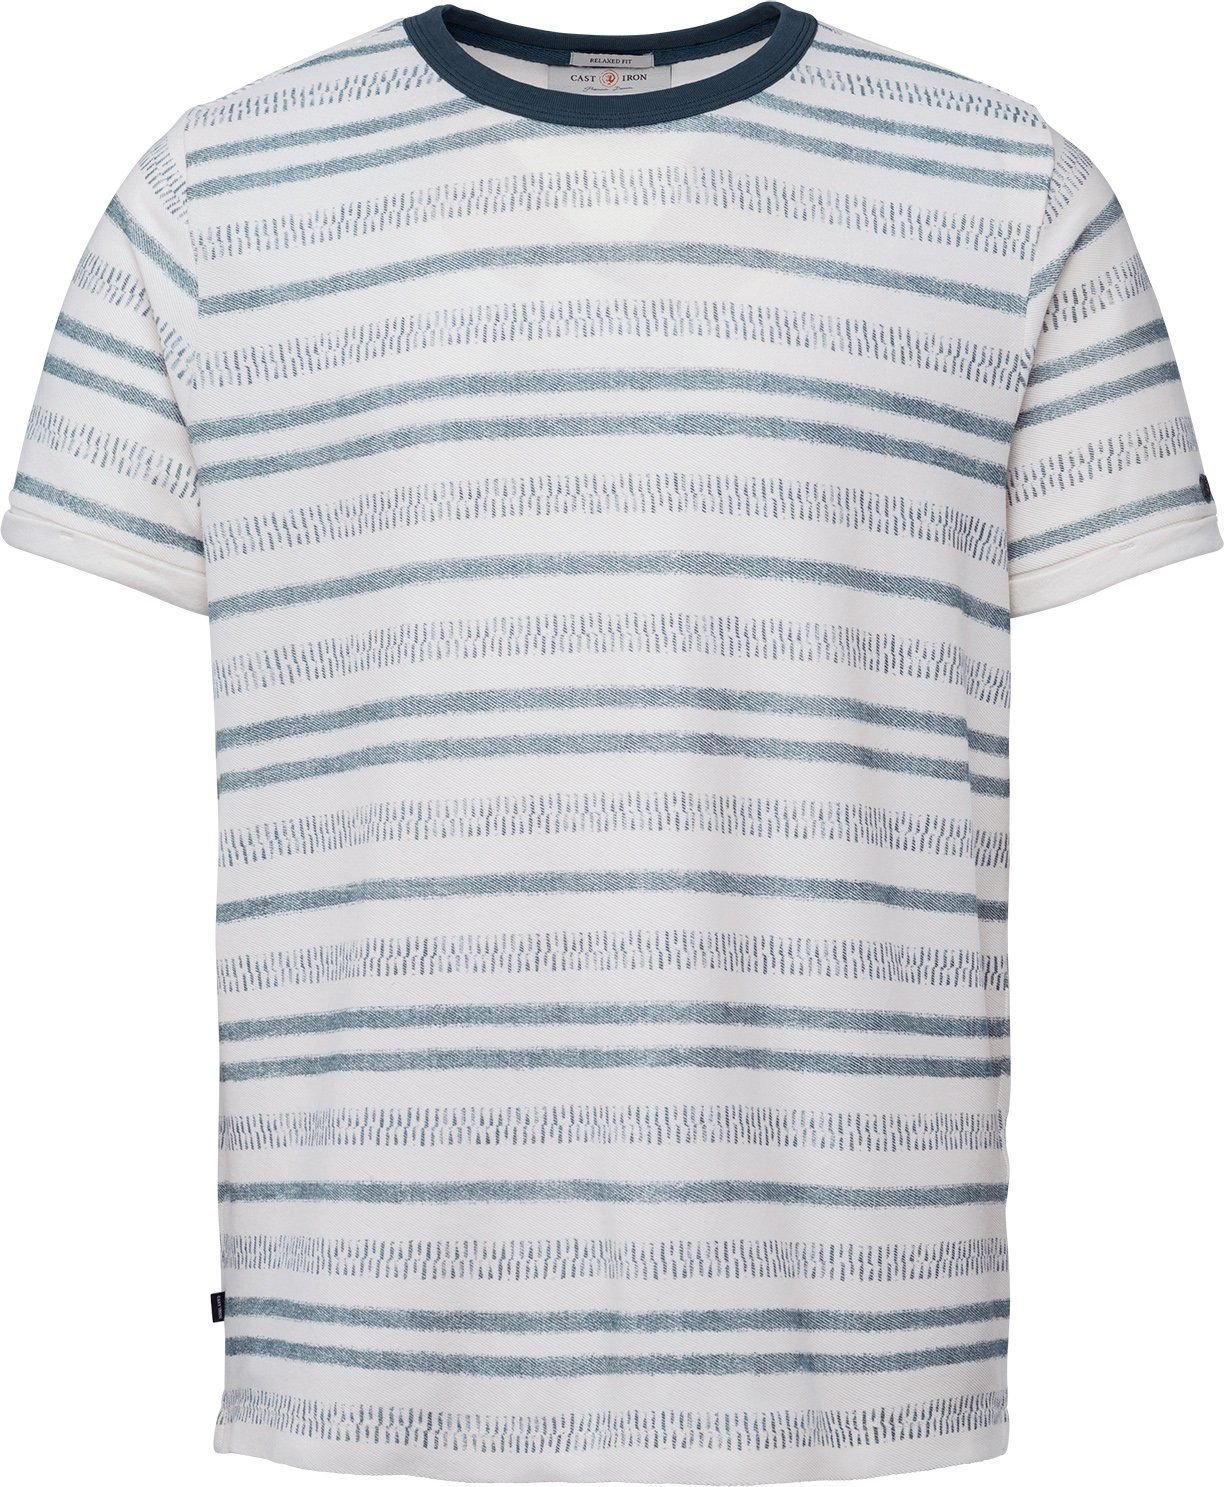 Cast Iron T Shirt Striped Off-White size L